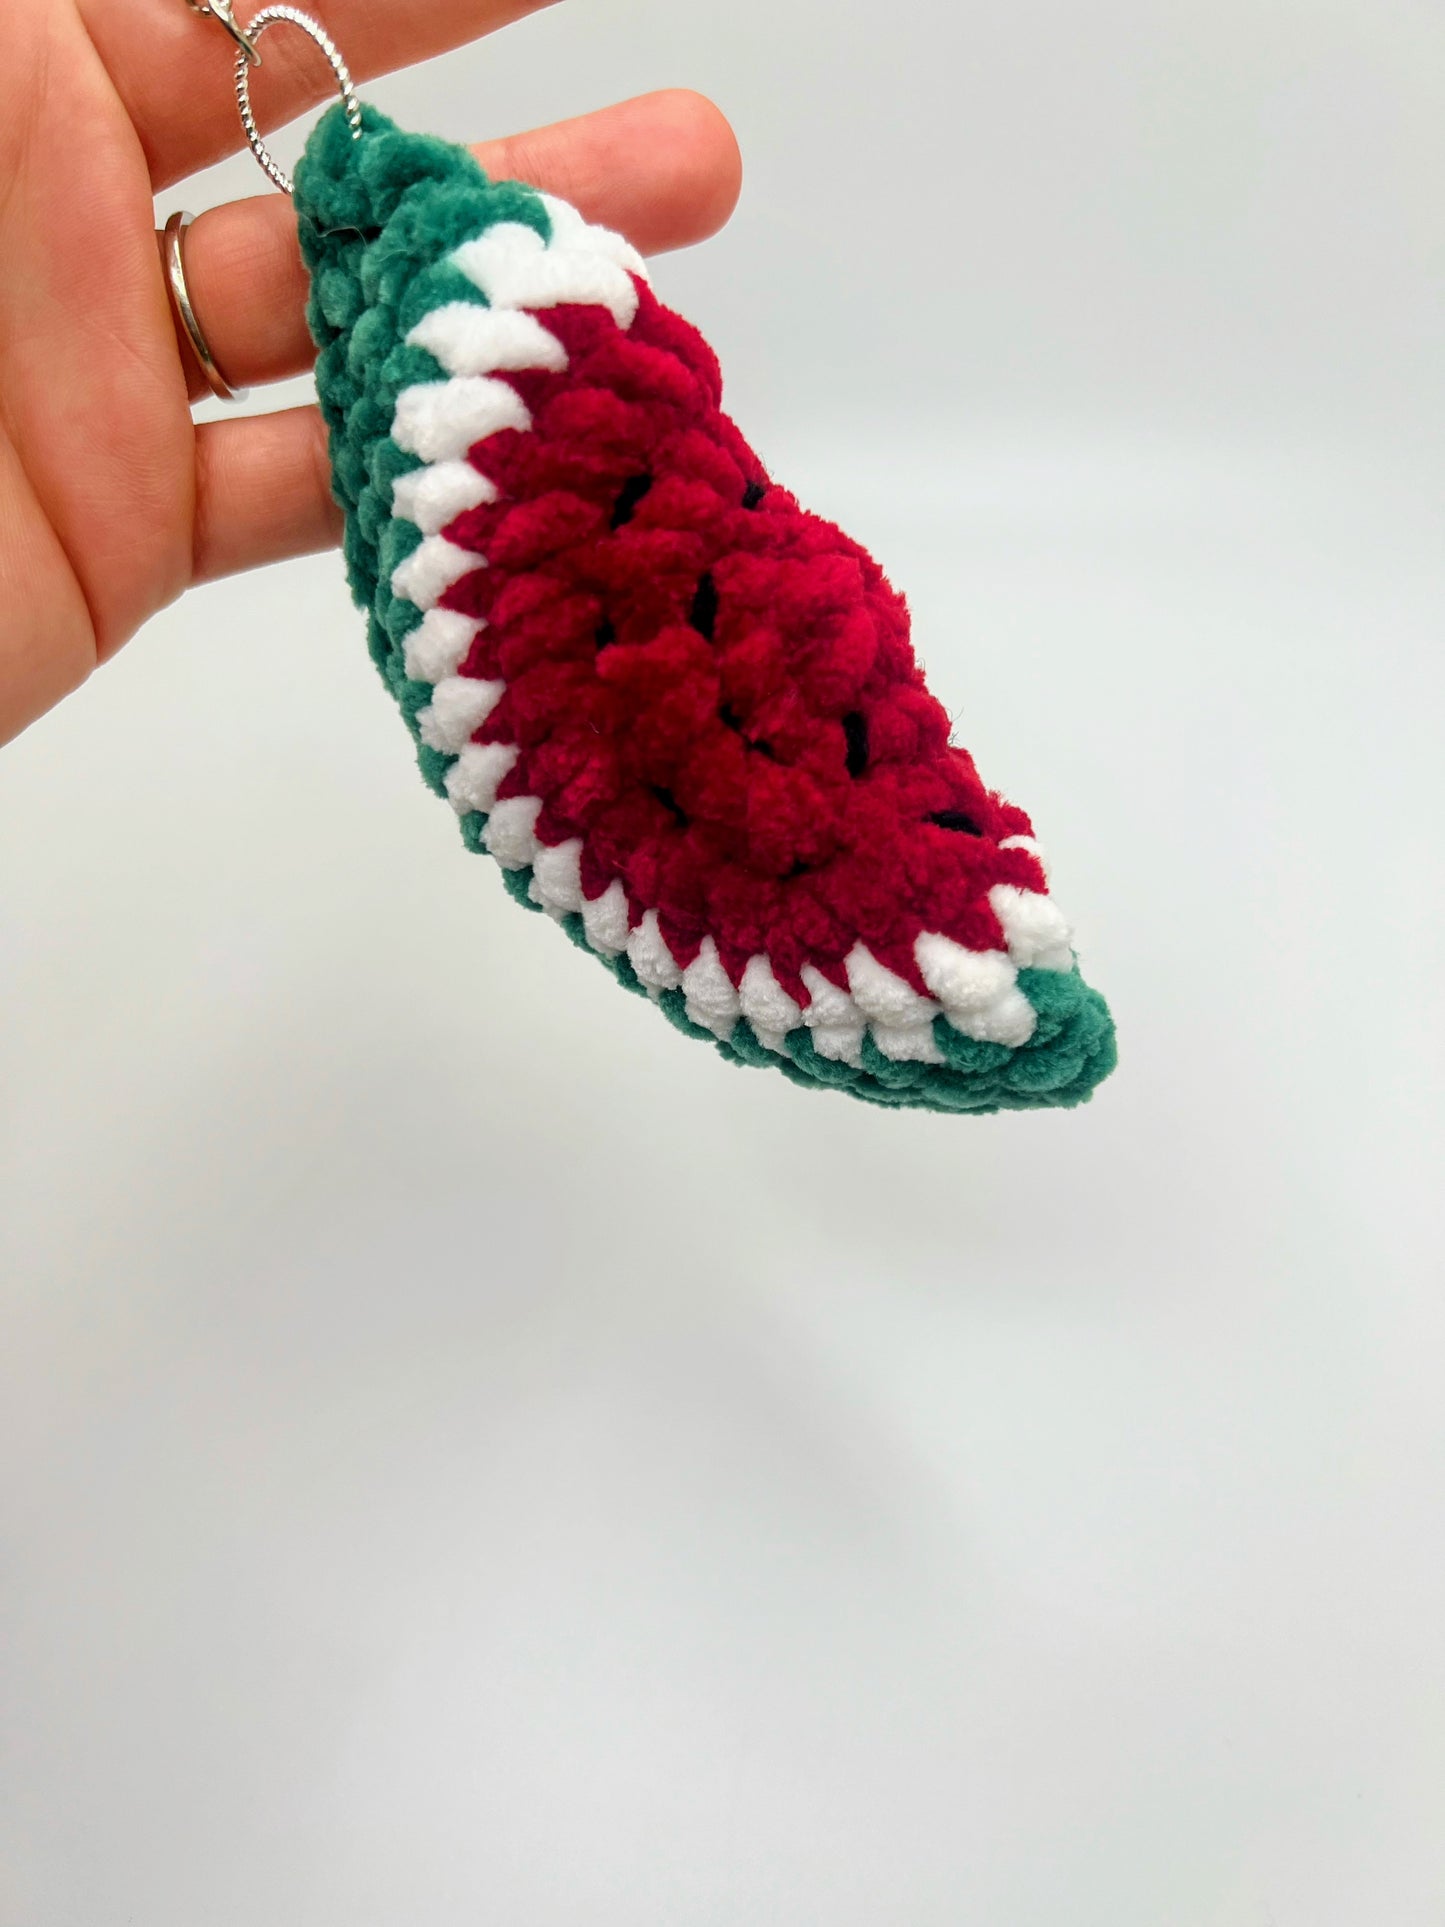 Half Slice Watermelon 🍉 Keychain - Crochet Knitted Amigurumi Toy